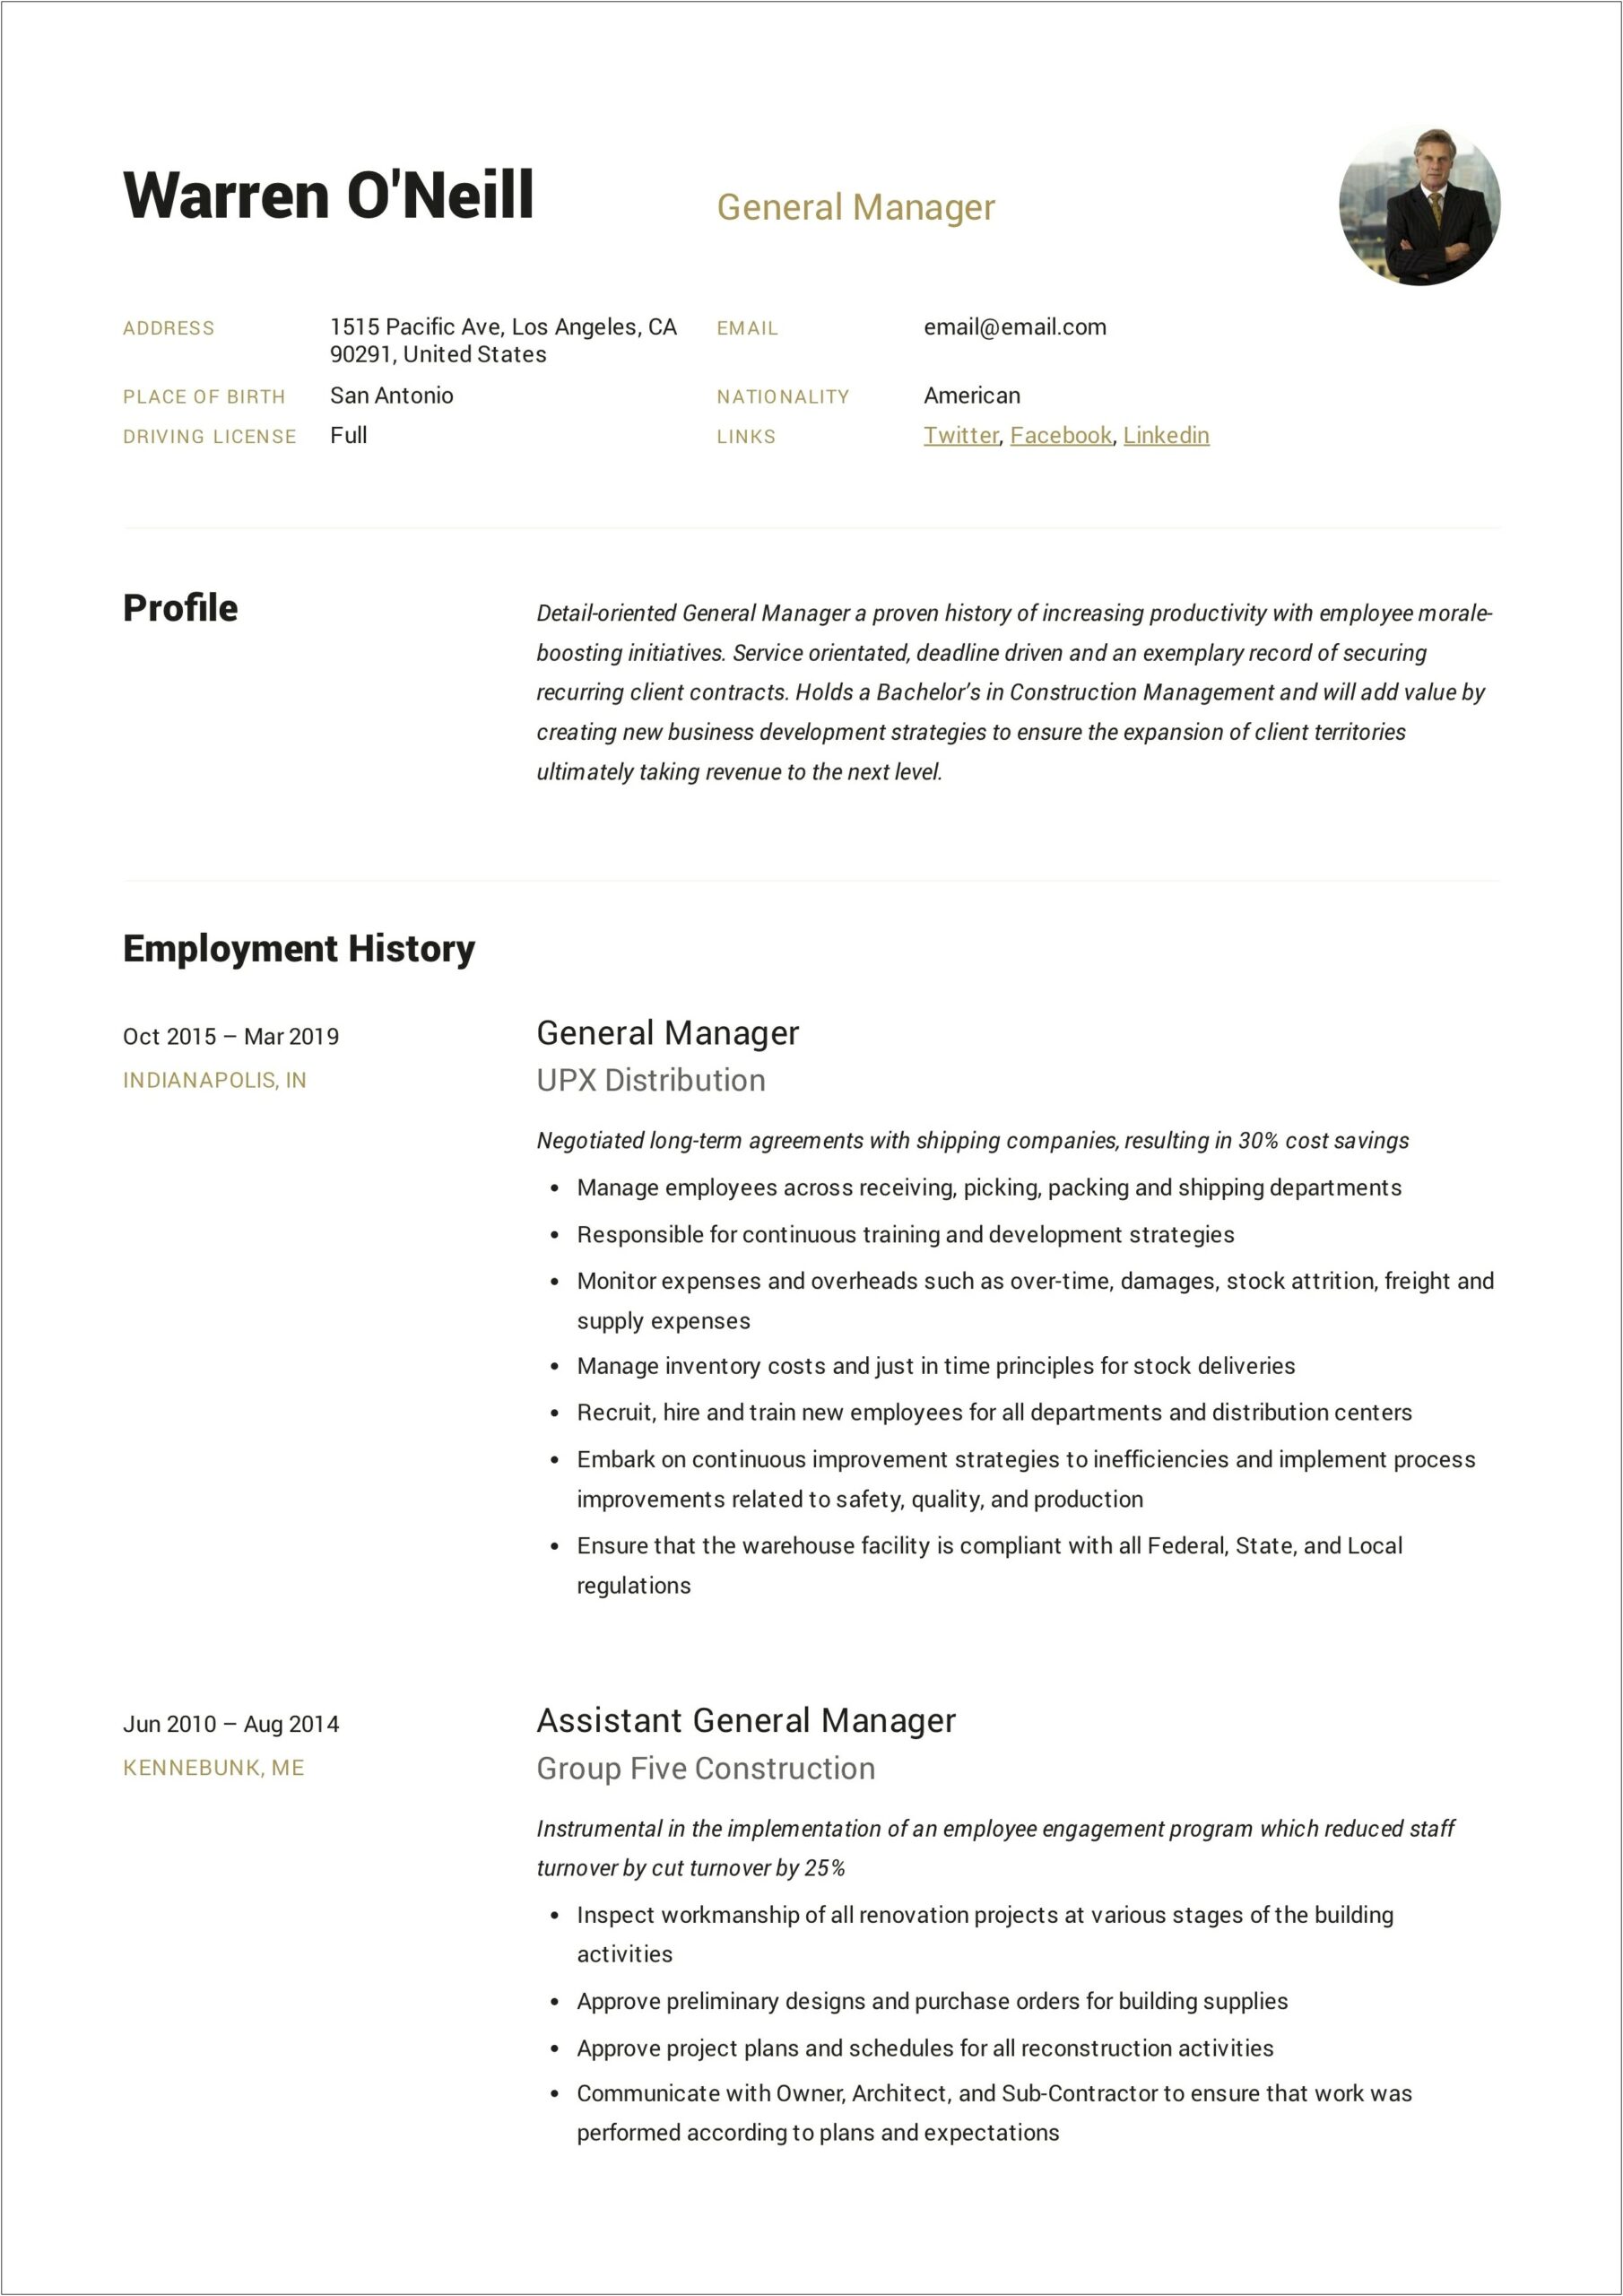 Resume For General Manager At Rent Acenter